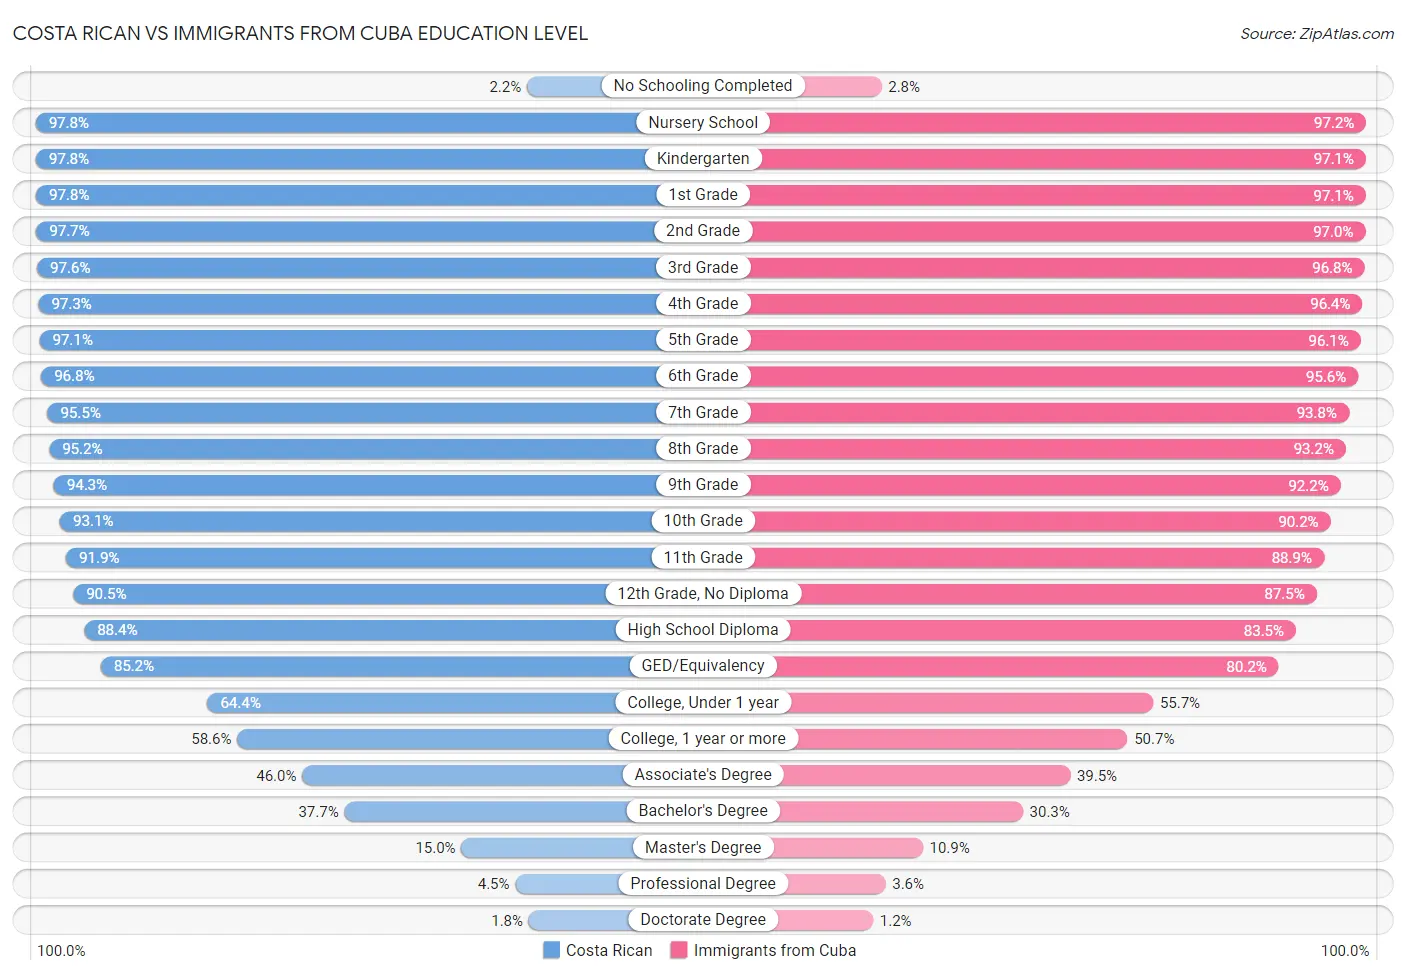 Costa Rican vs Immigrants from Cuba Education Level